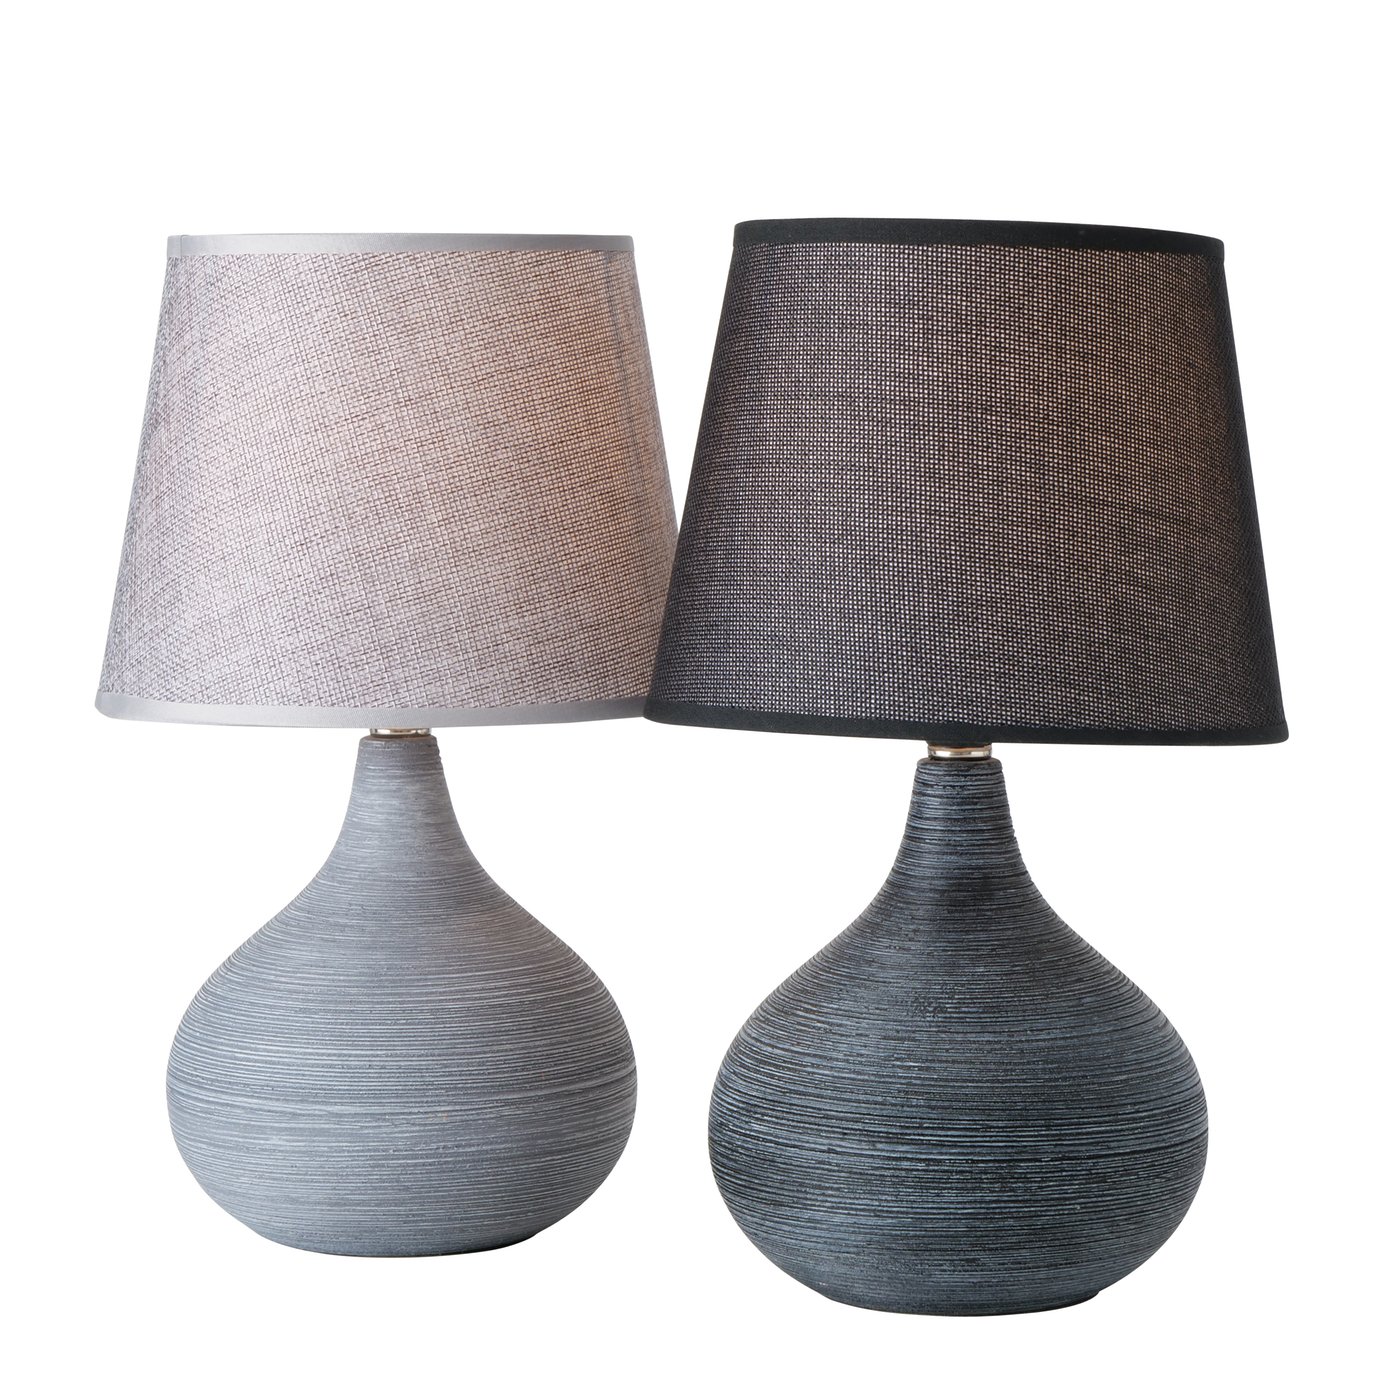 &Quirky Karan Table Lamp : Dark Grey or Light Grey